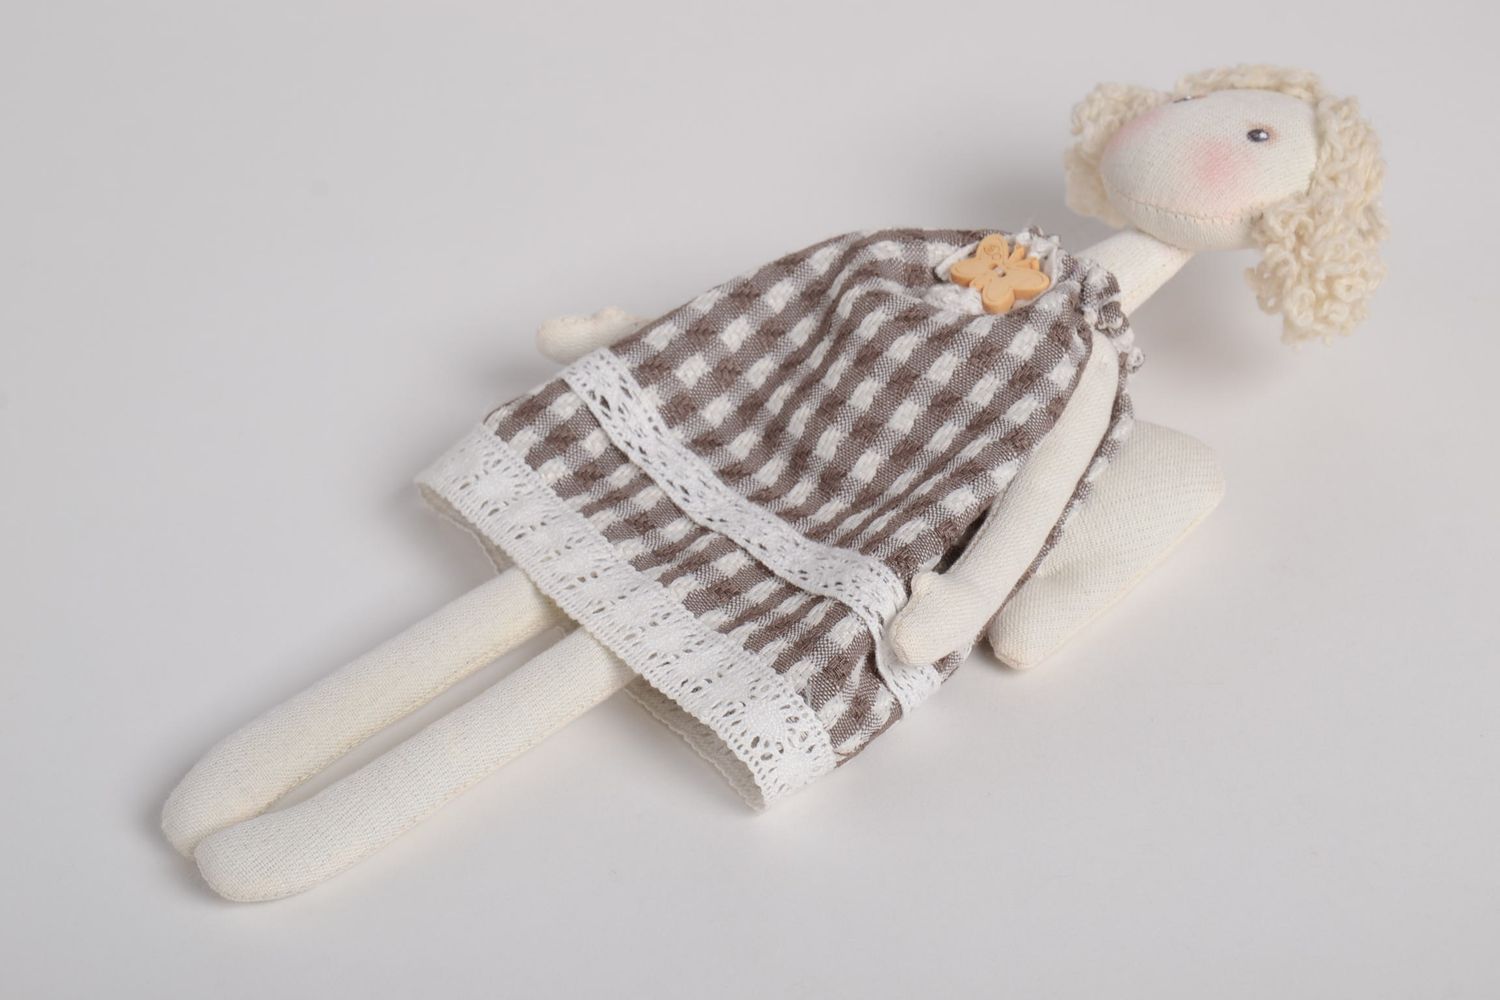 Soft doll handmade stuffed toy for children nursery decor ideas home decor photo 2